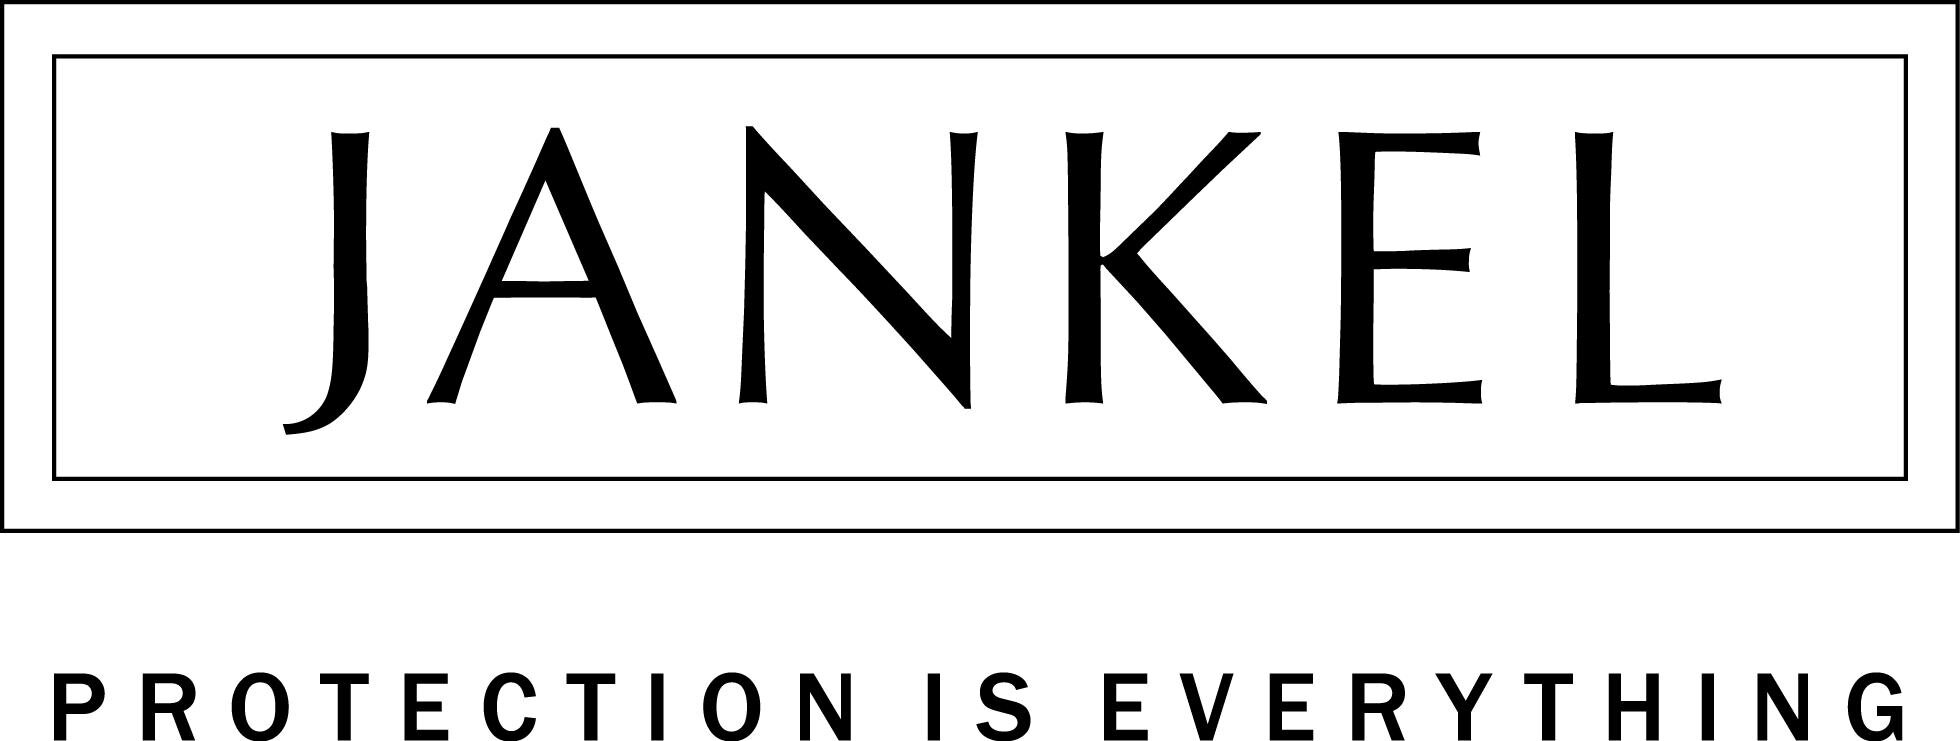 Jankel_Logo.jpg